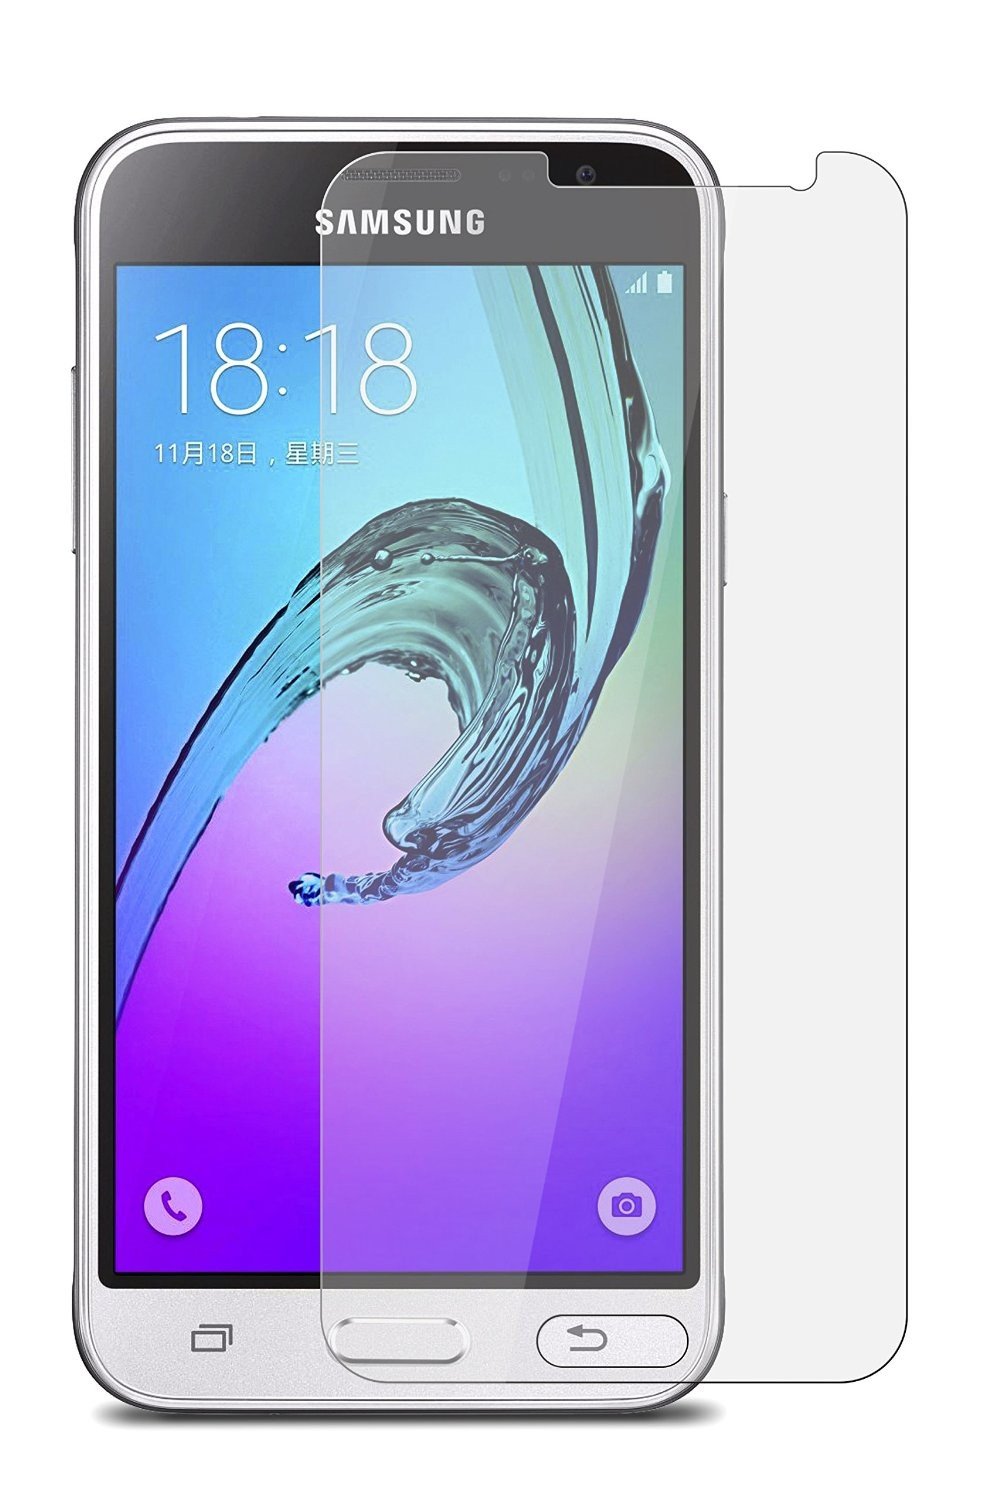 Screenprotector Samsung Galaxy J1 2016 - anti glare